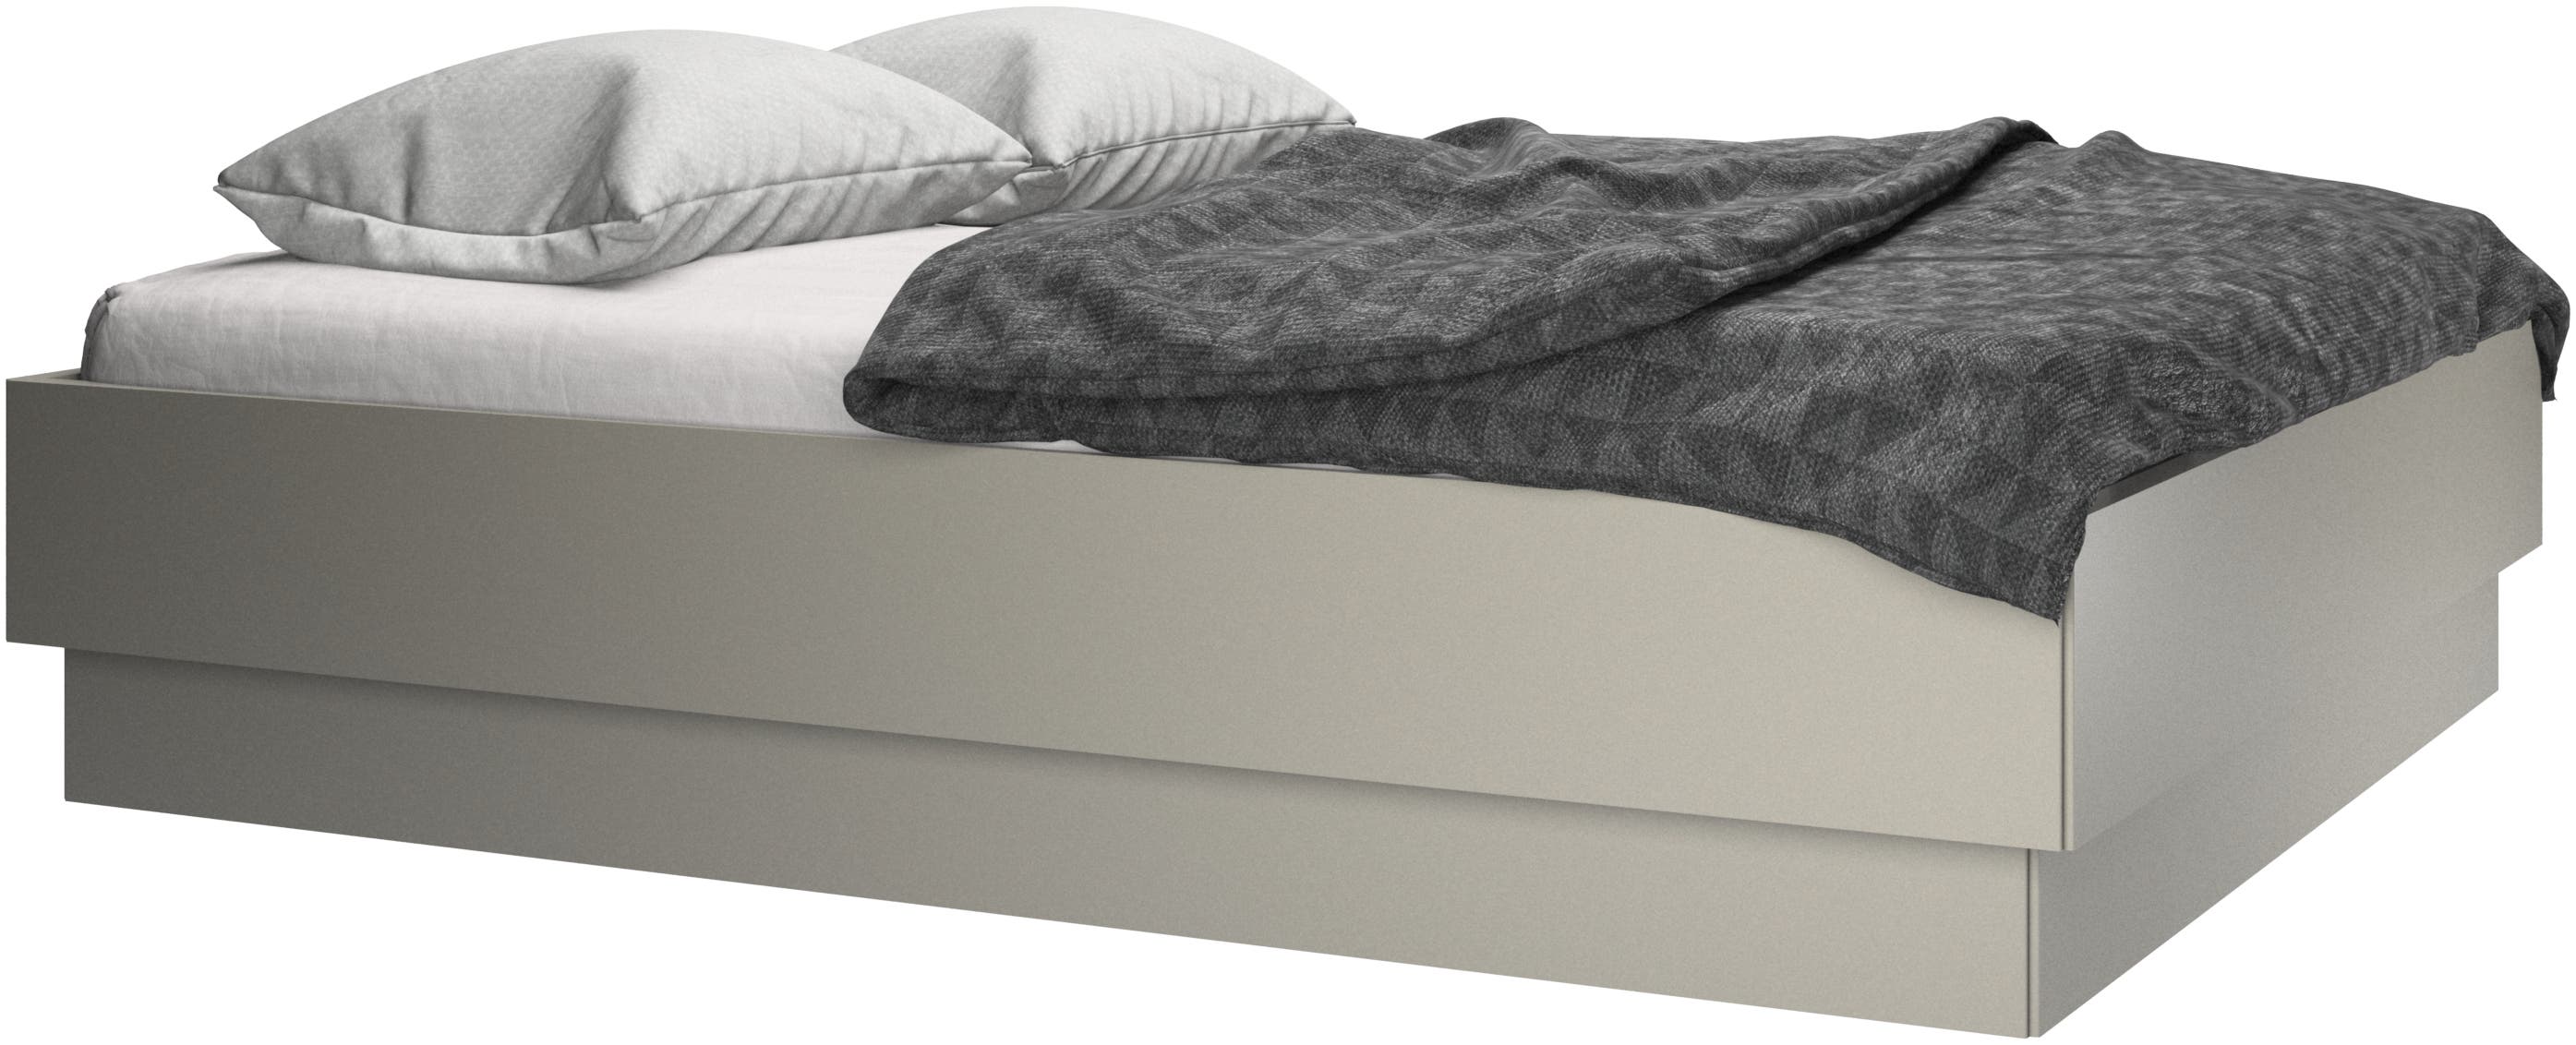 Lugano bed, excl. slats and mattress